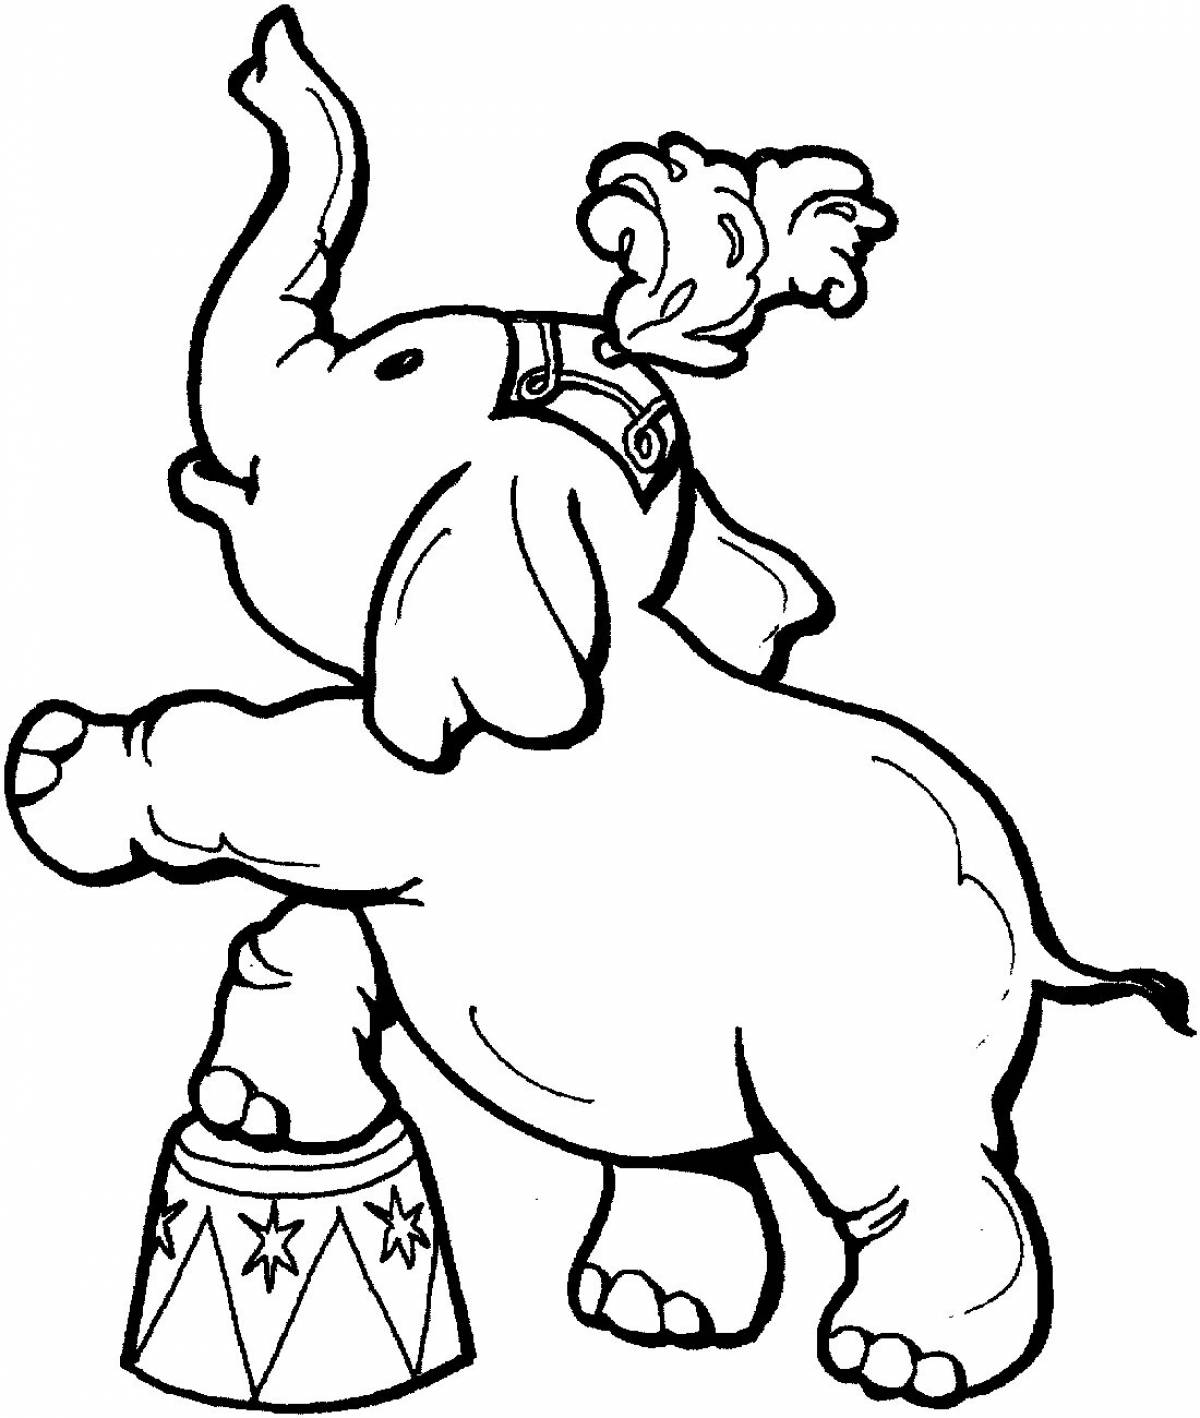 Fun elephant coloring